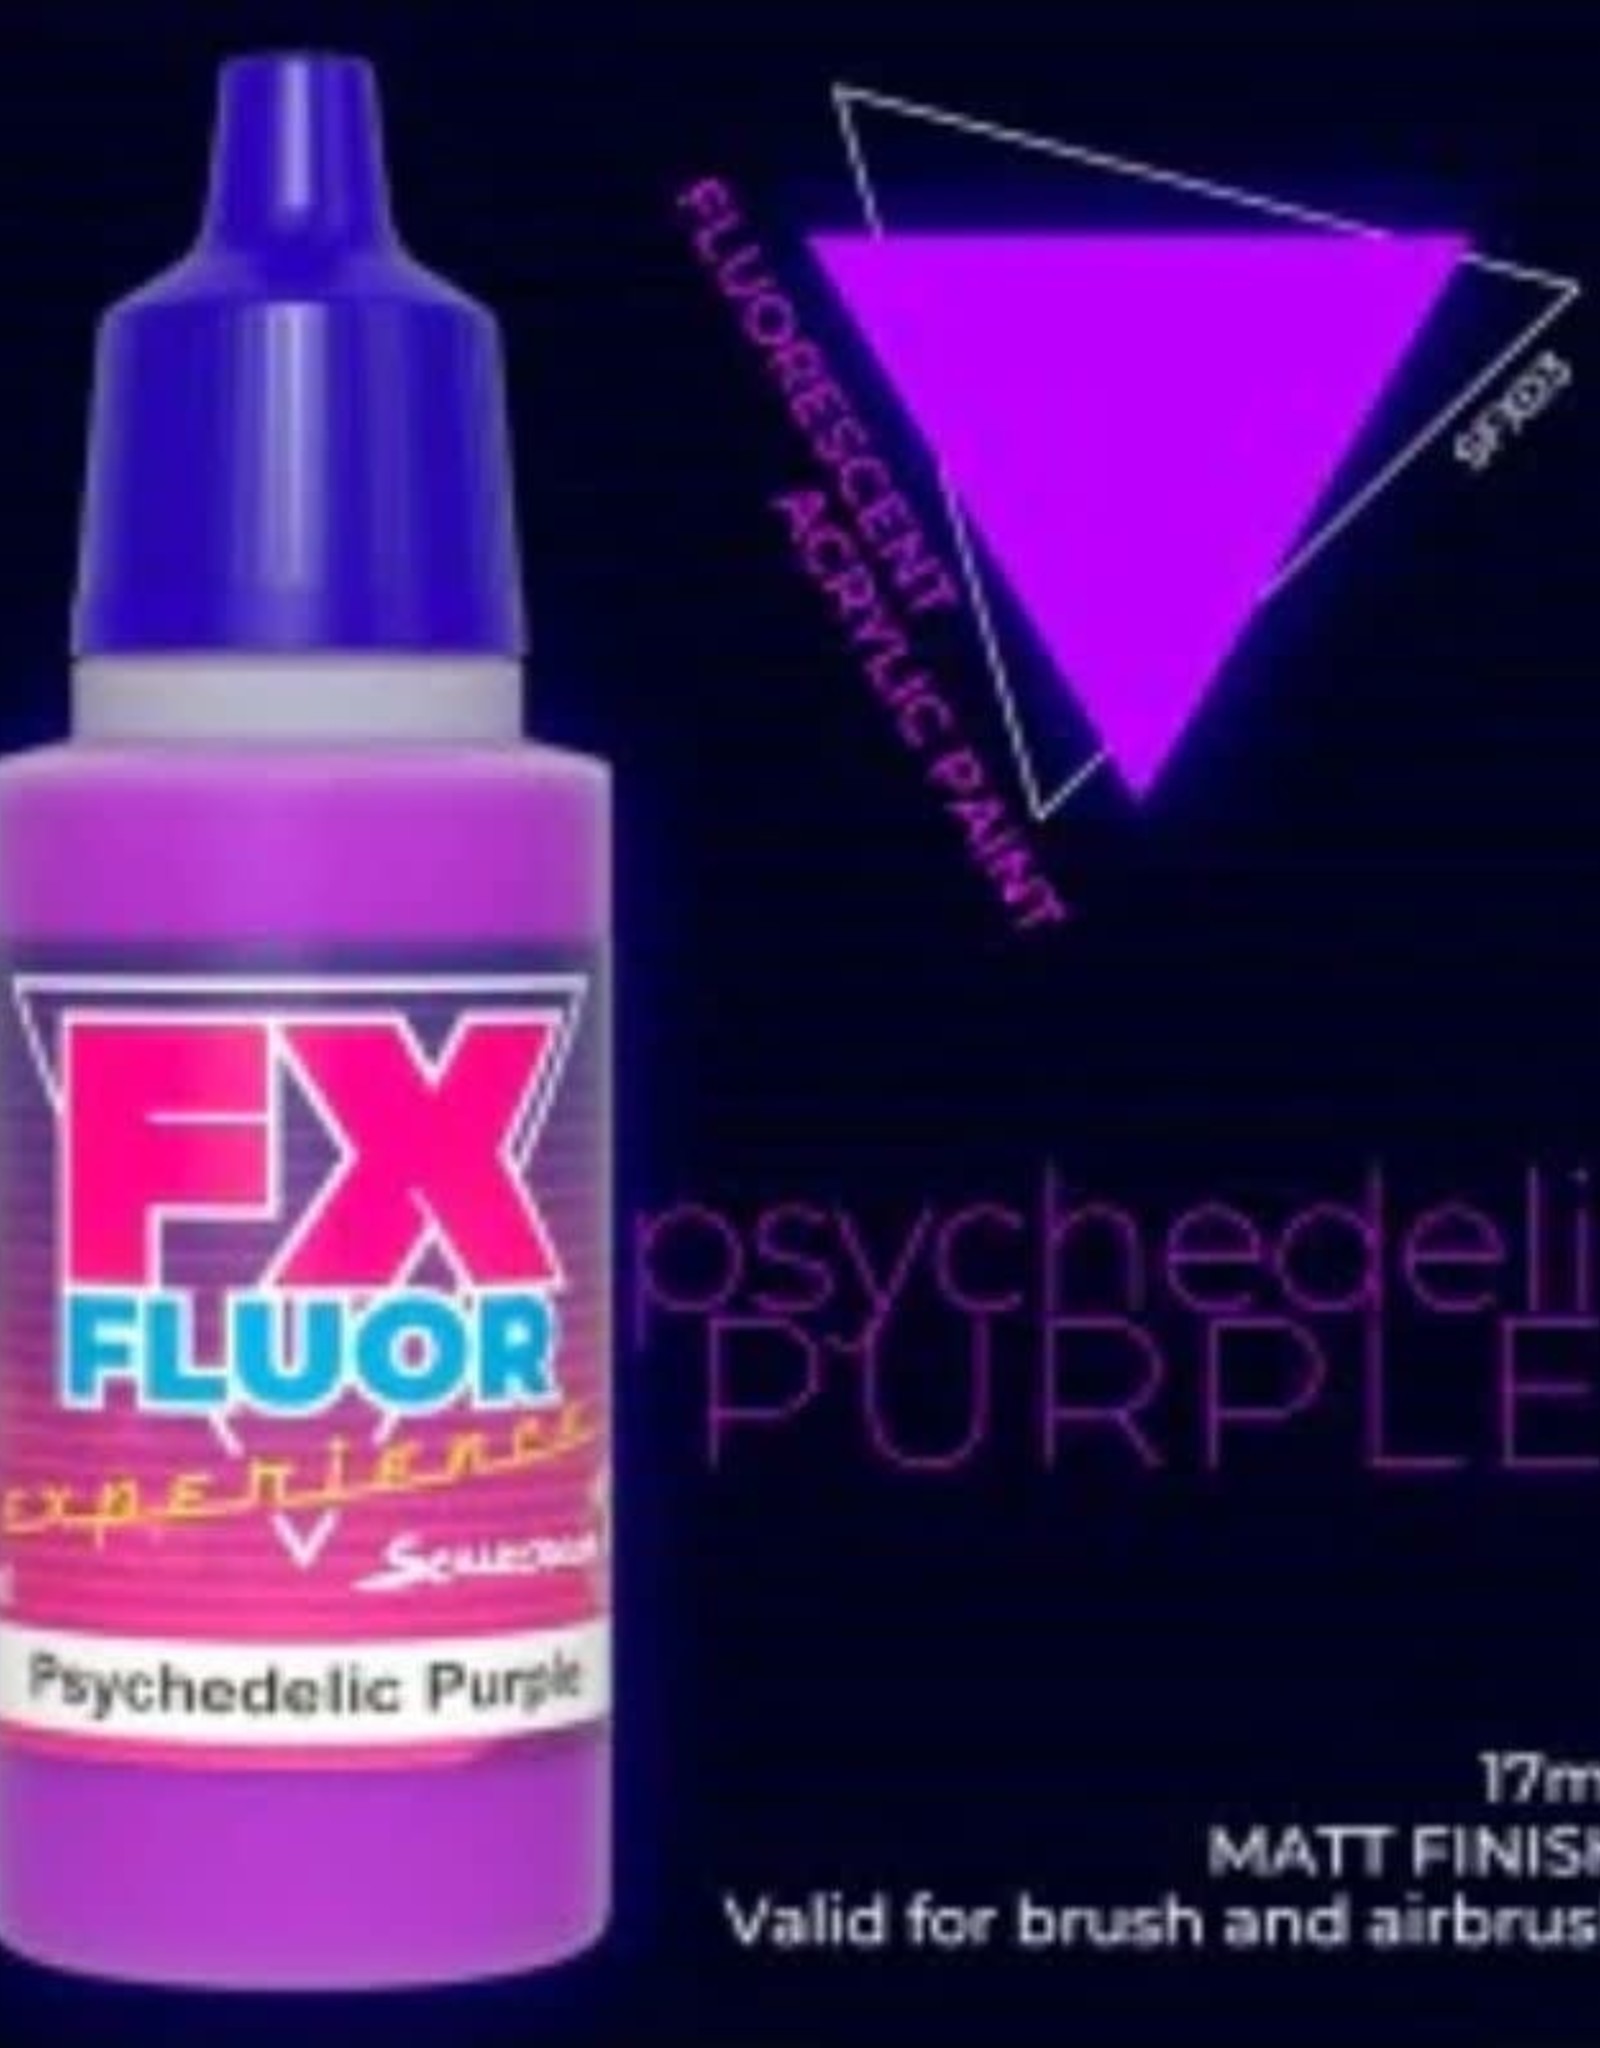 Scale75 FX Flour: Psychedelic Purple